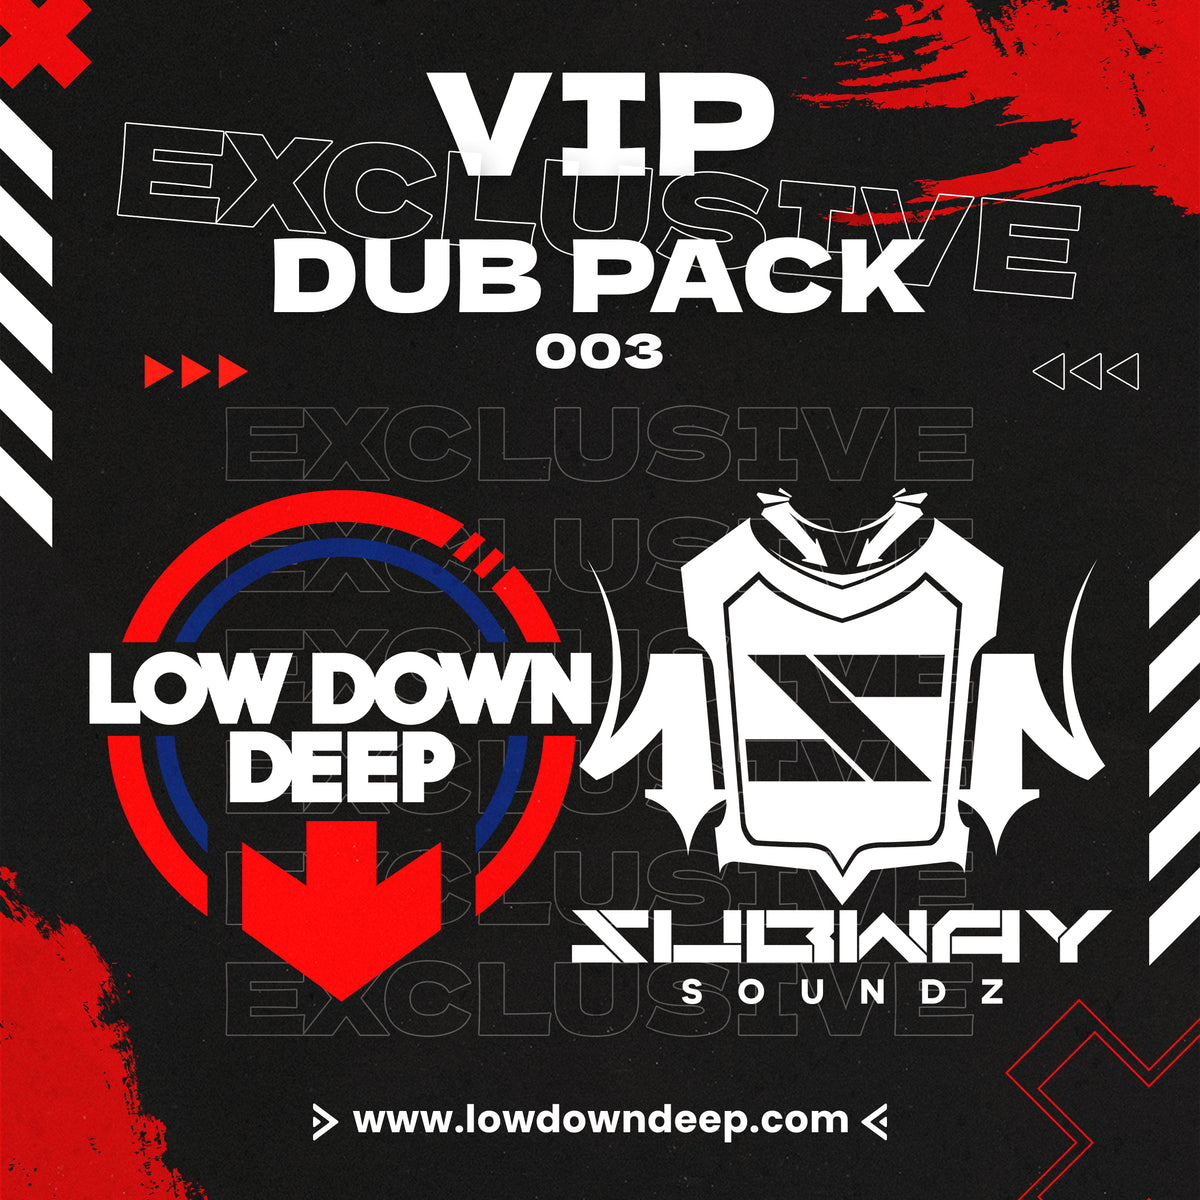 LOW DOWN DEEP & SUBWAY SOUNDZ EXCLUSIVE VIP DUB PACK 003